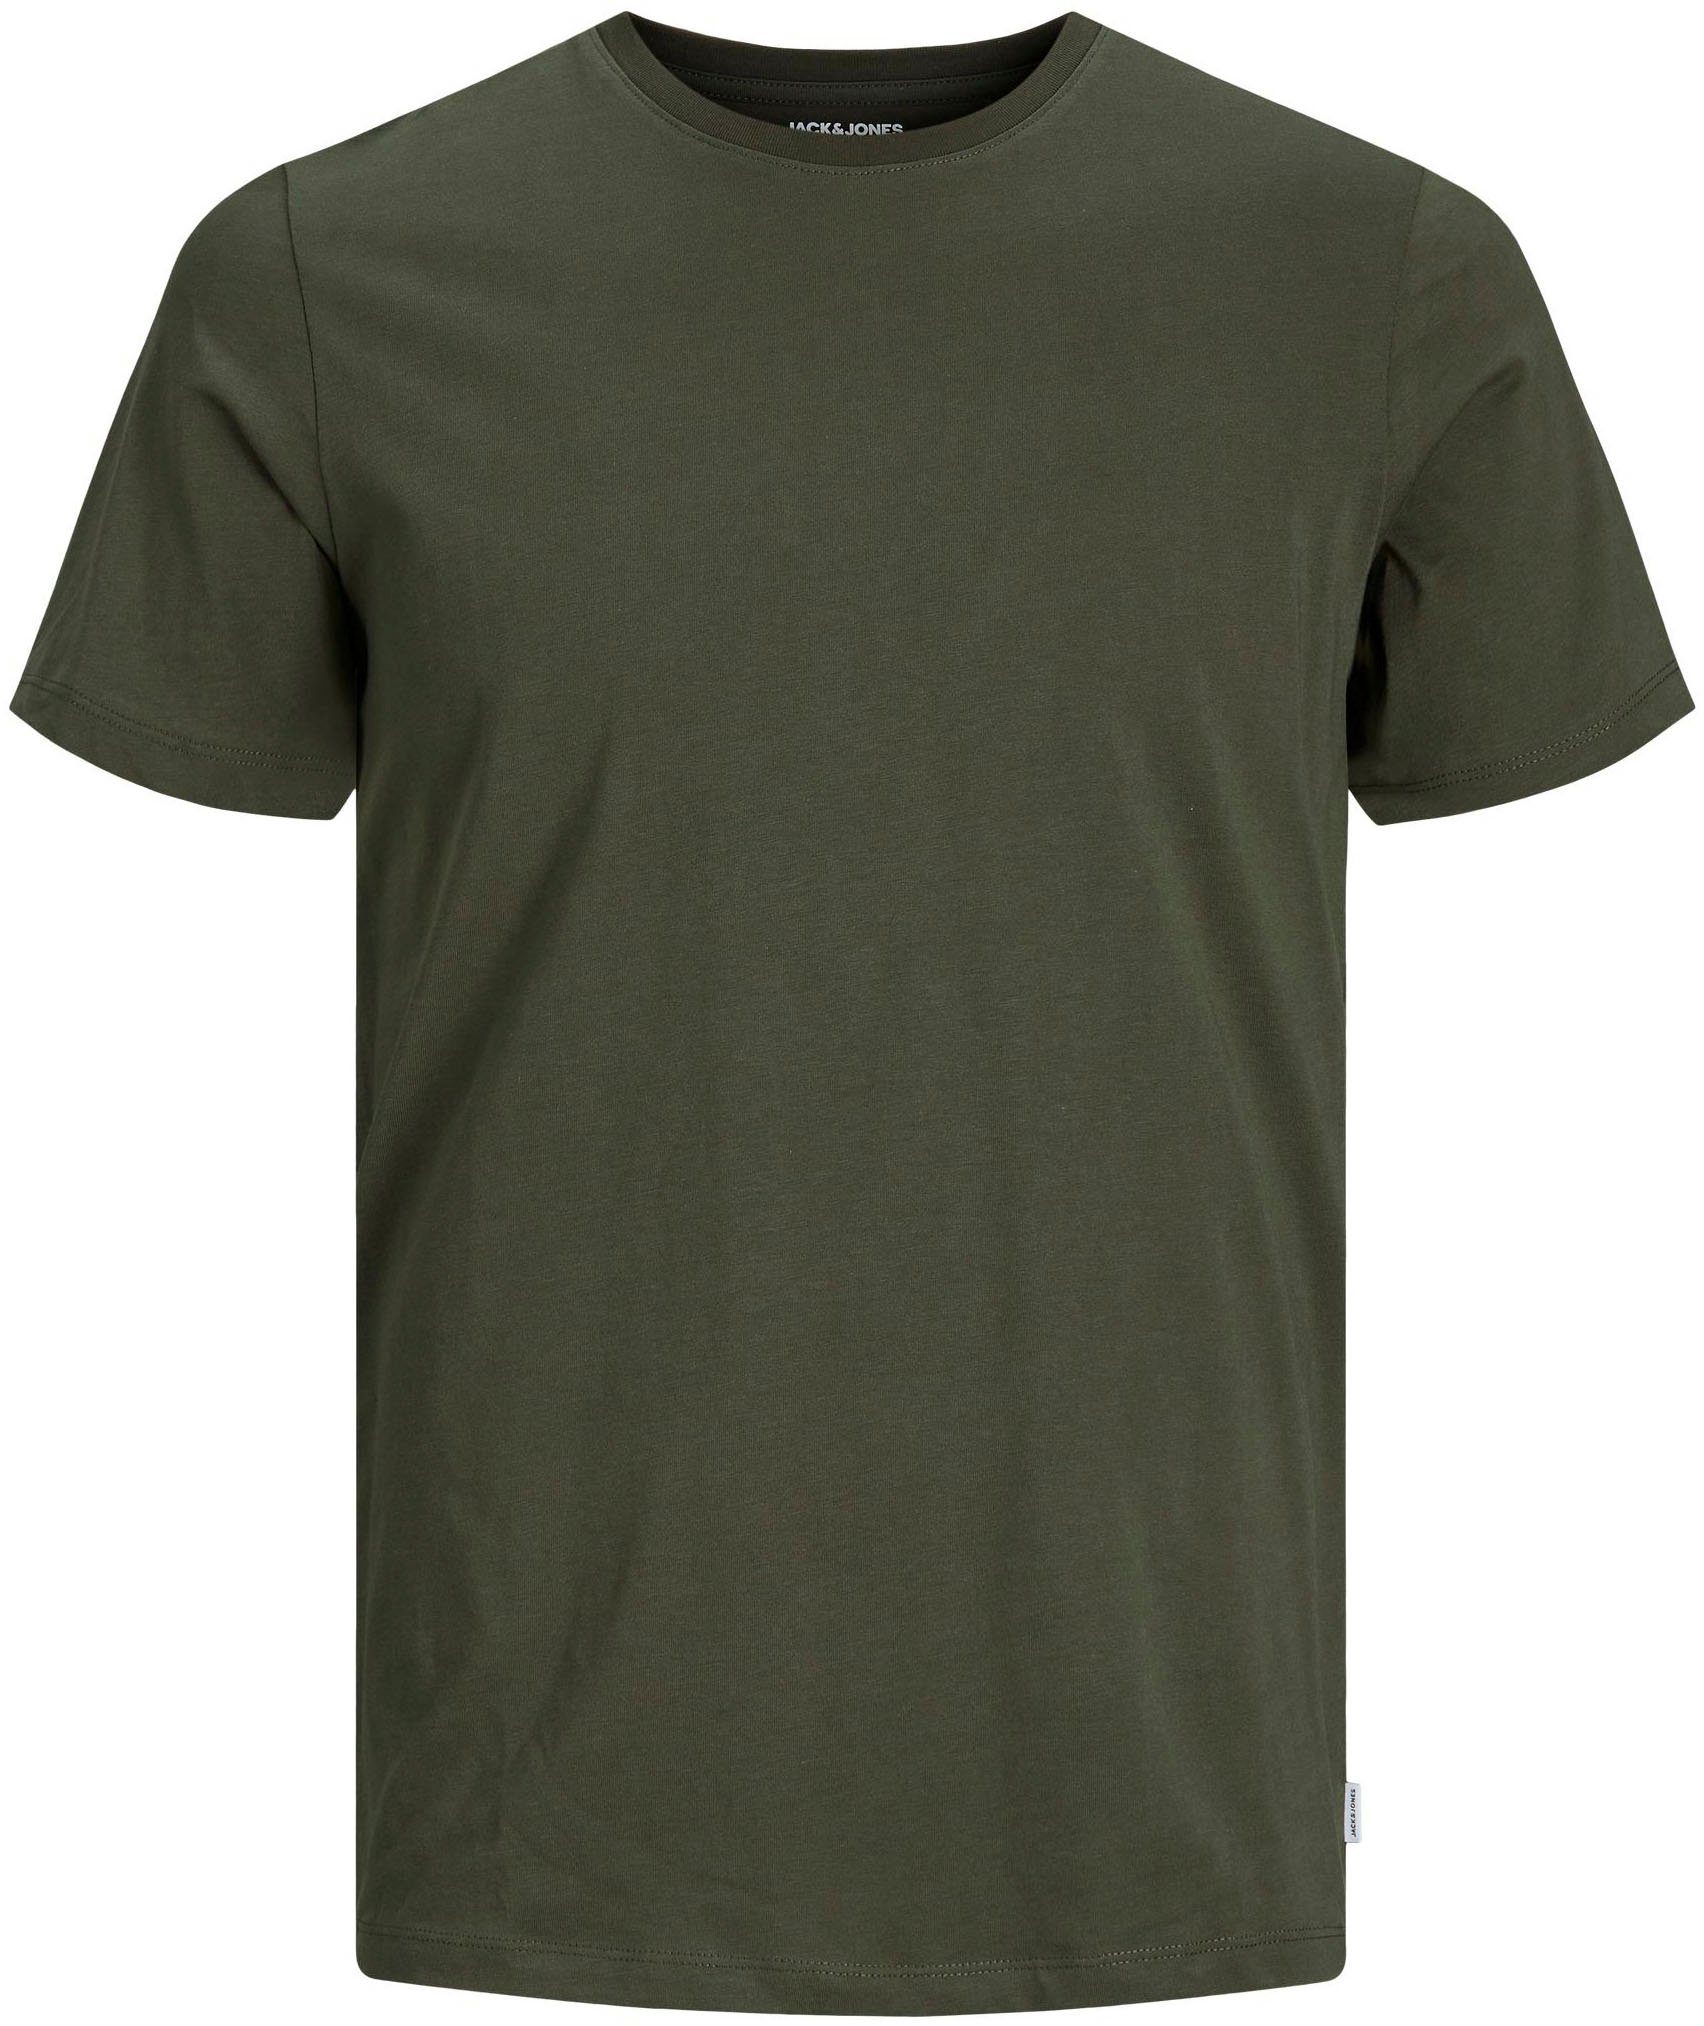 & Jones TEE ORGANIC olivgrün T-Shirt BASIC Jack